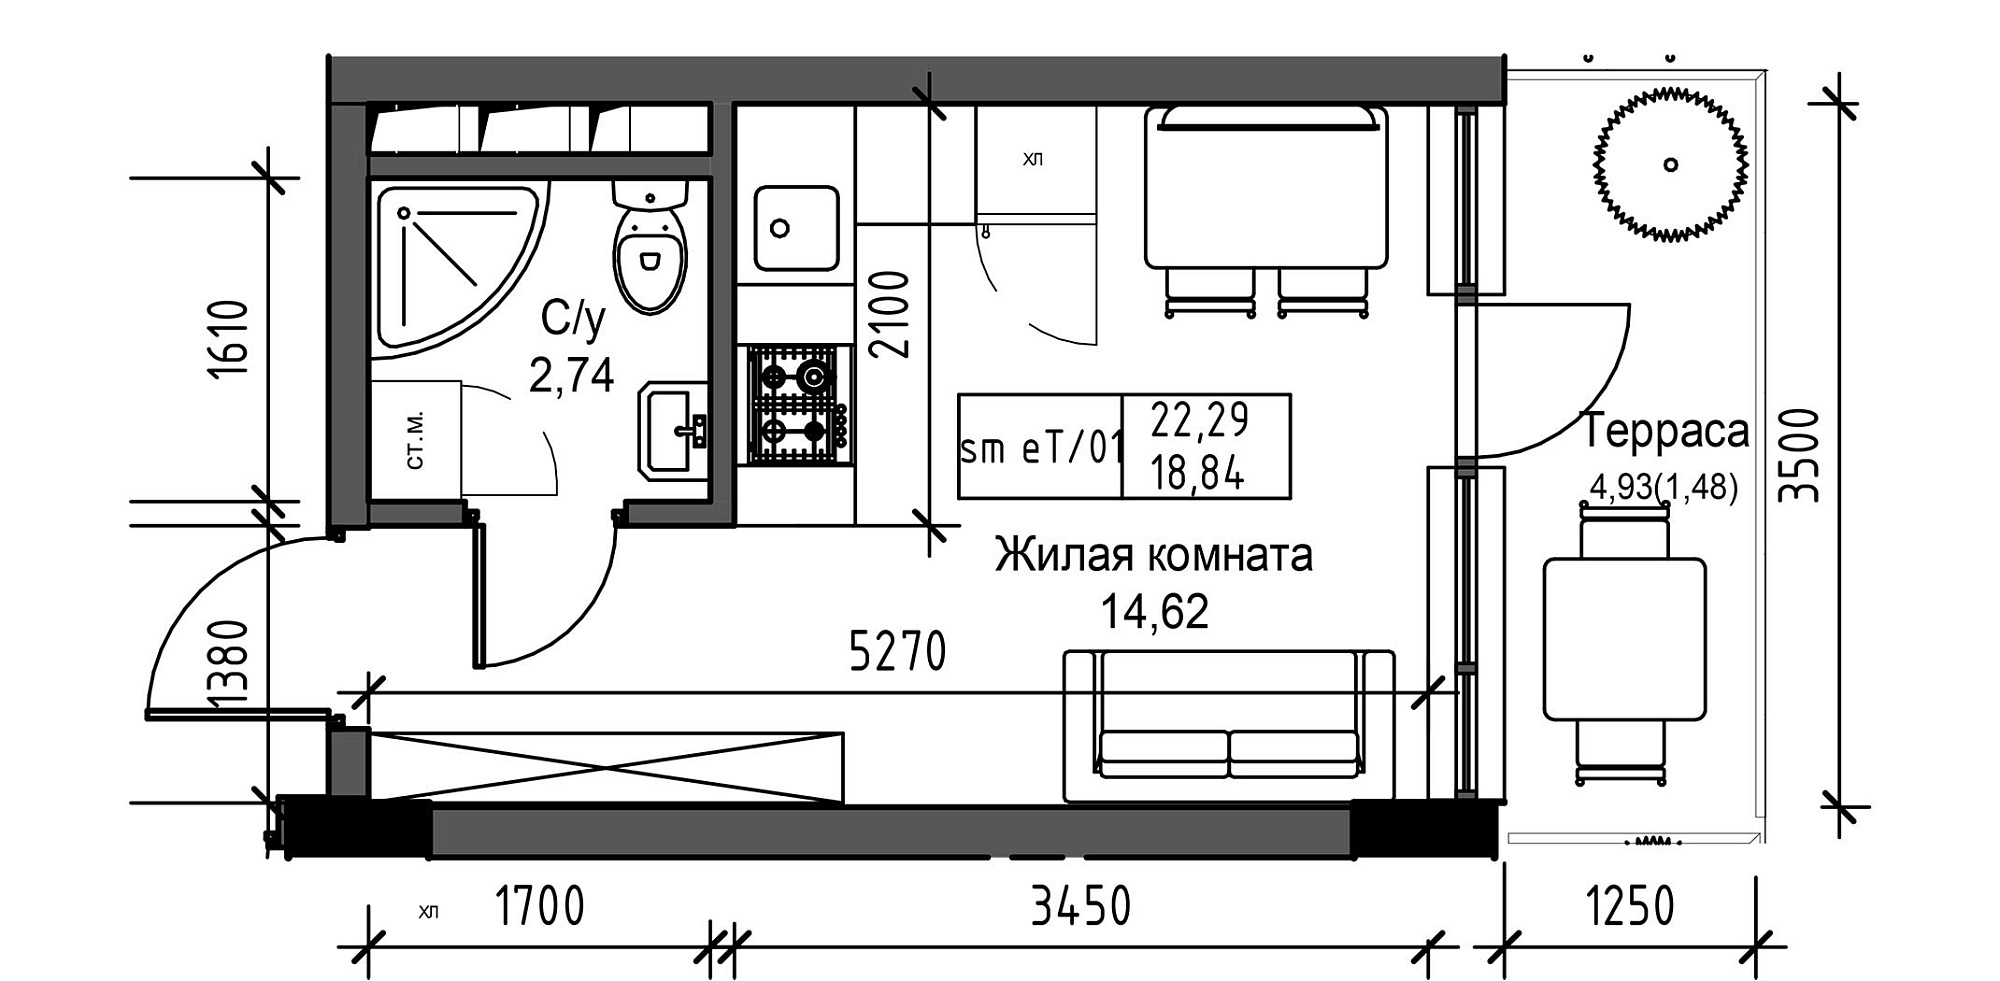 Planning Smart flats area 18.84m2, UM-003-09/0095.